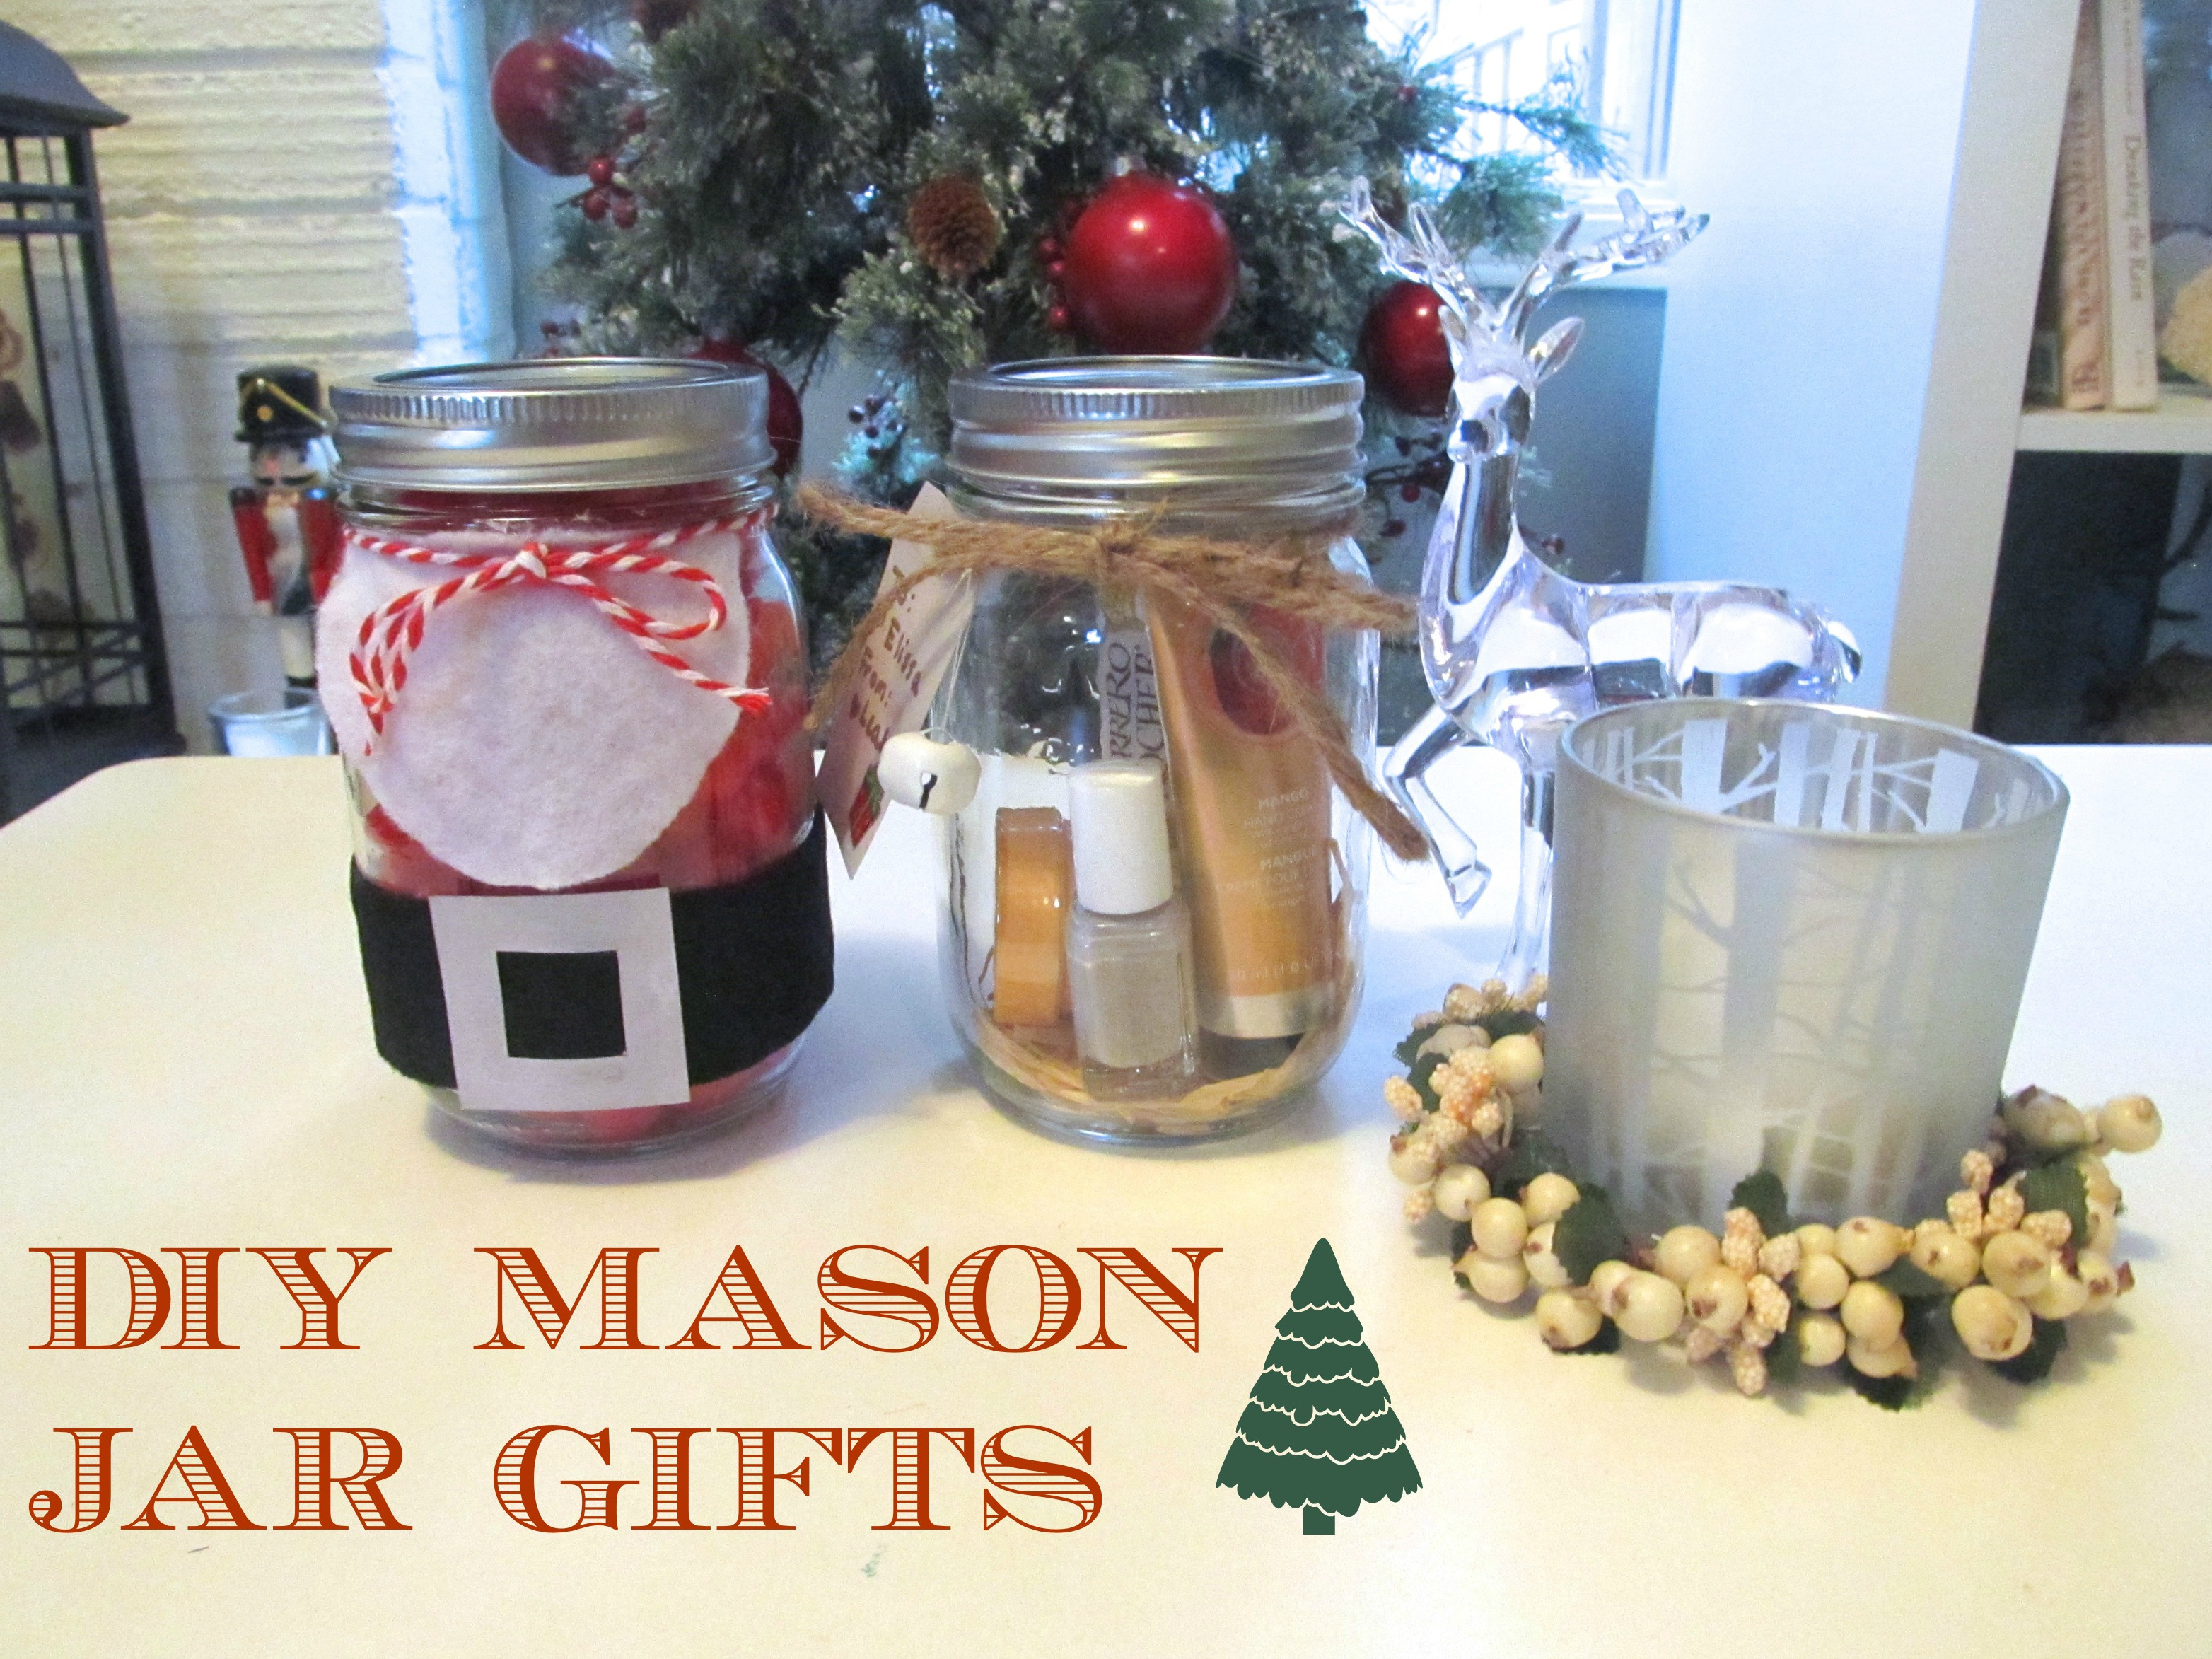 Best ideas about DIY Mason Jar Christmas Gifts
. Save or Pin DIY Mason Jar Gifts – Ellerow Now.